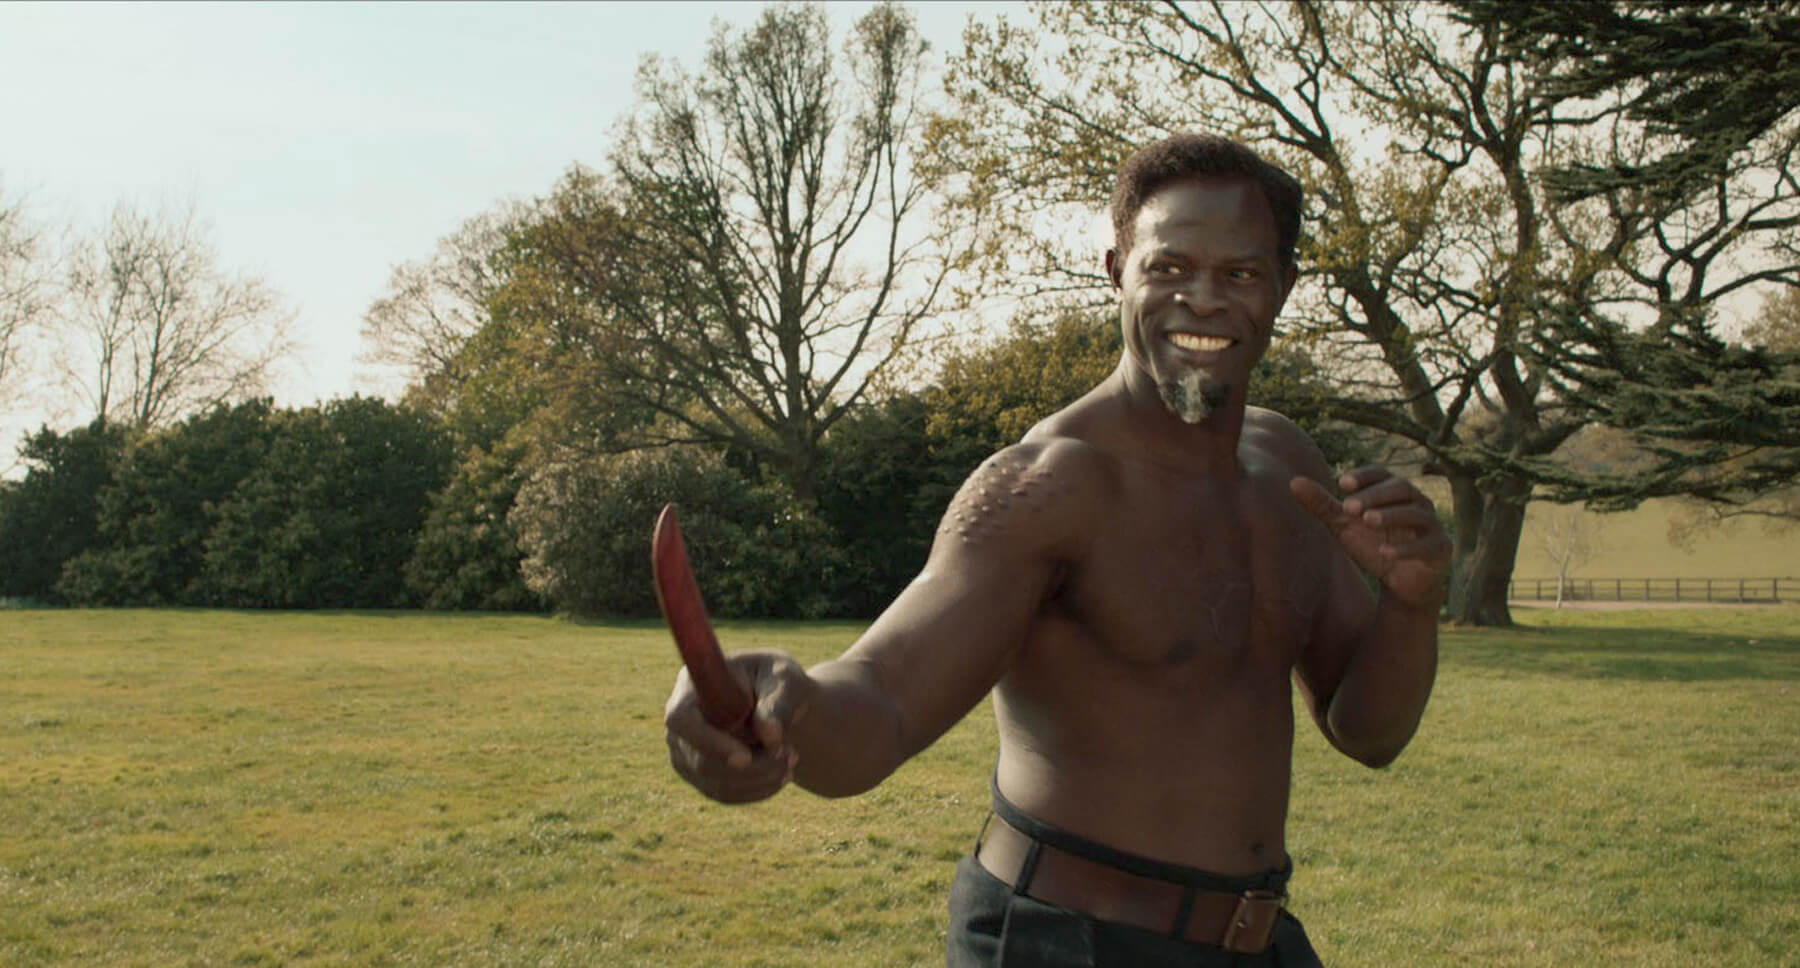 Djimon Hounsou as Shola in the movie "The King's Man"